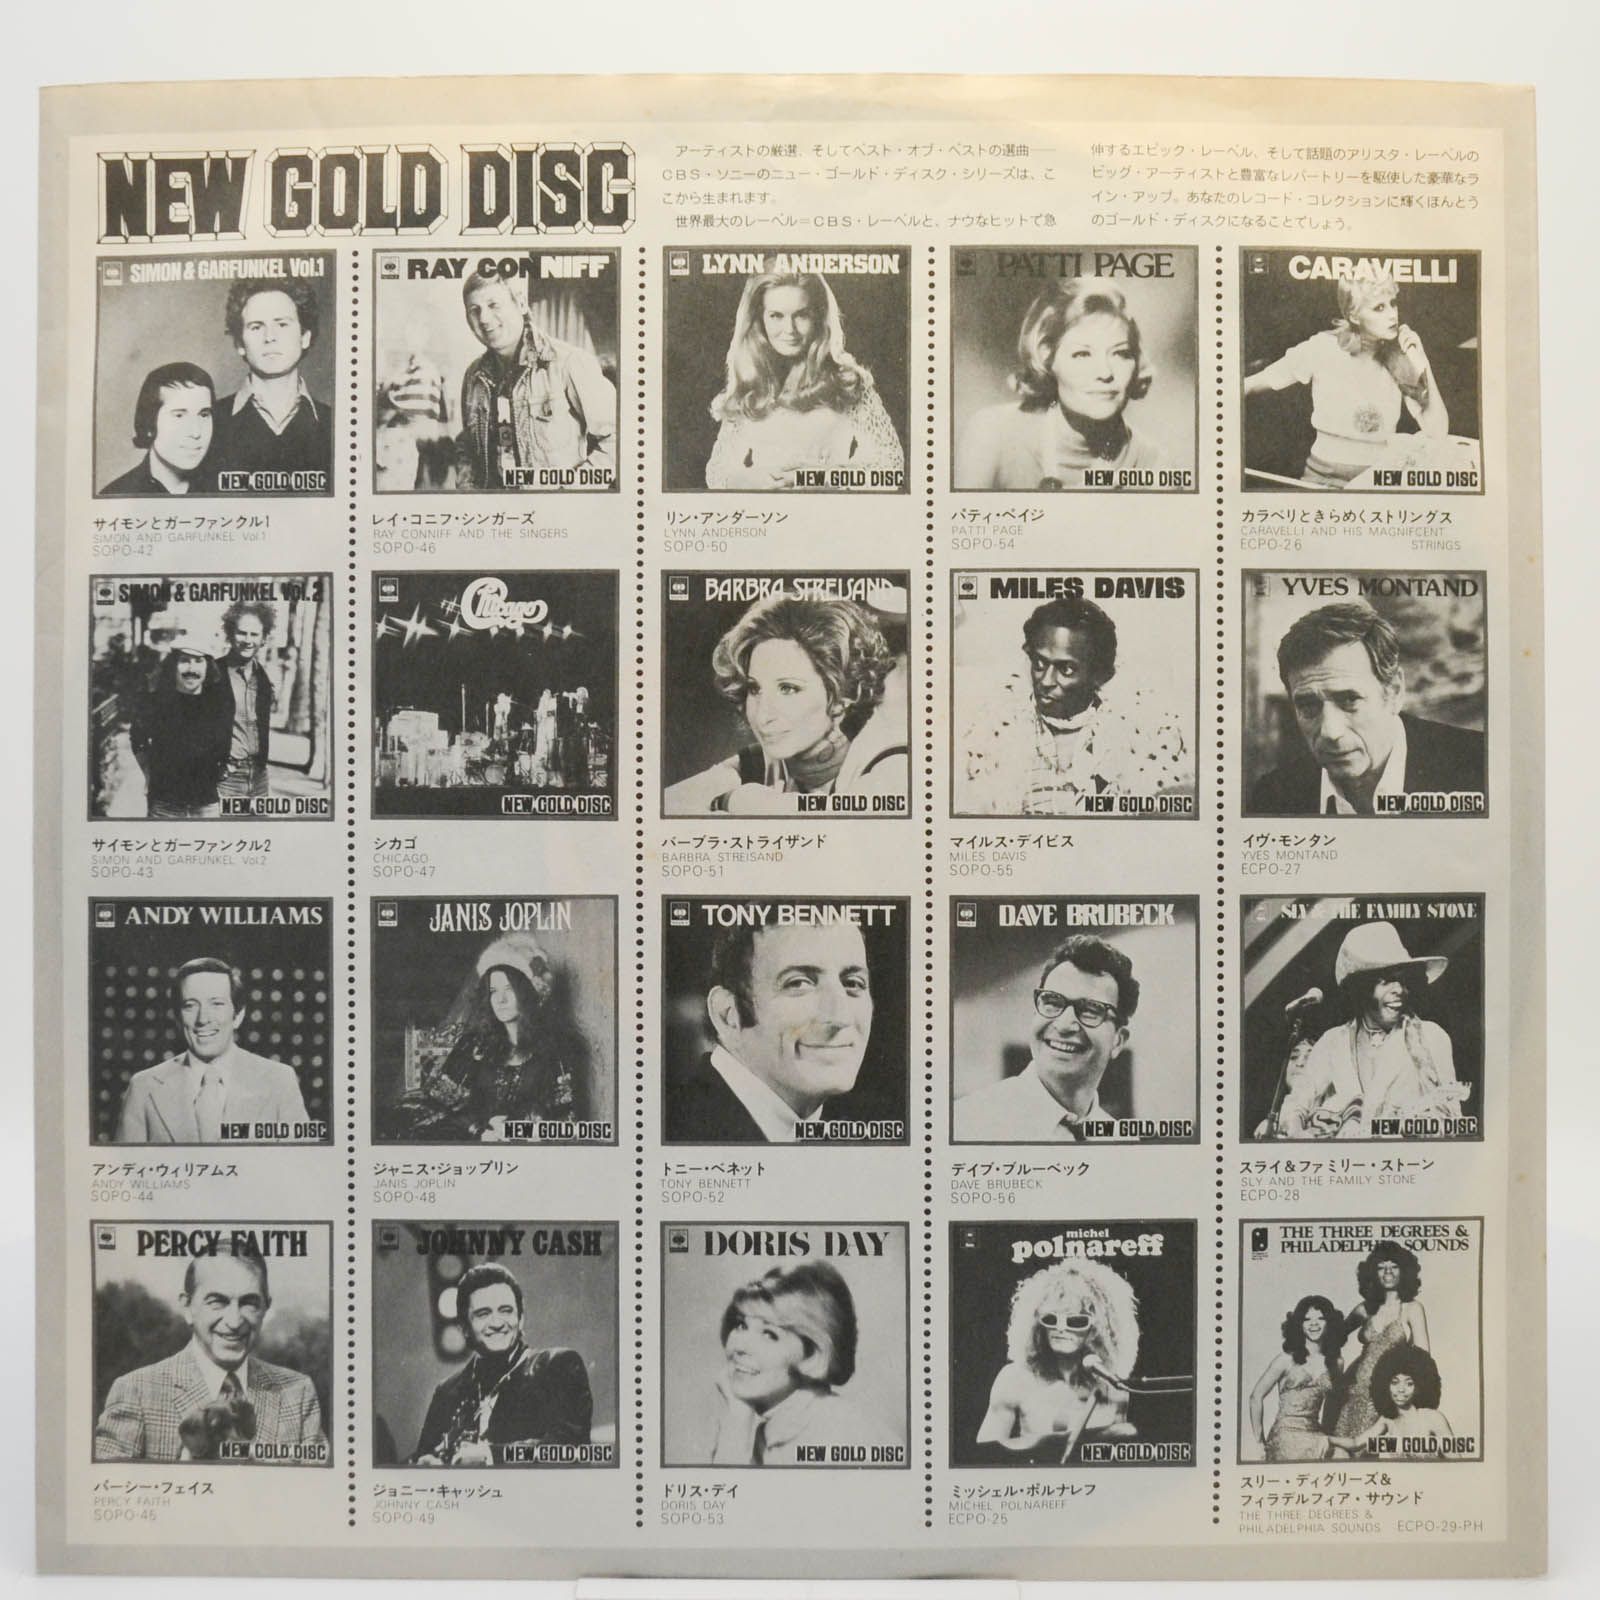 Santana — New Gold Disc, 1975